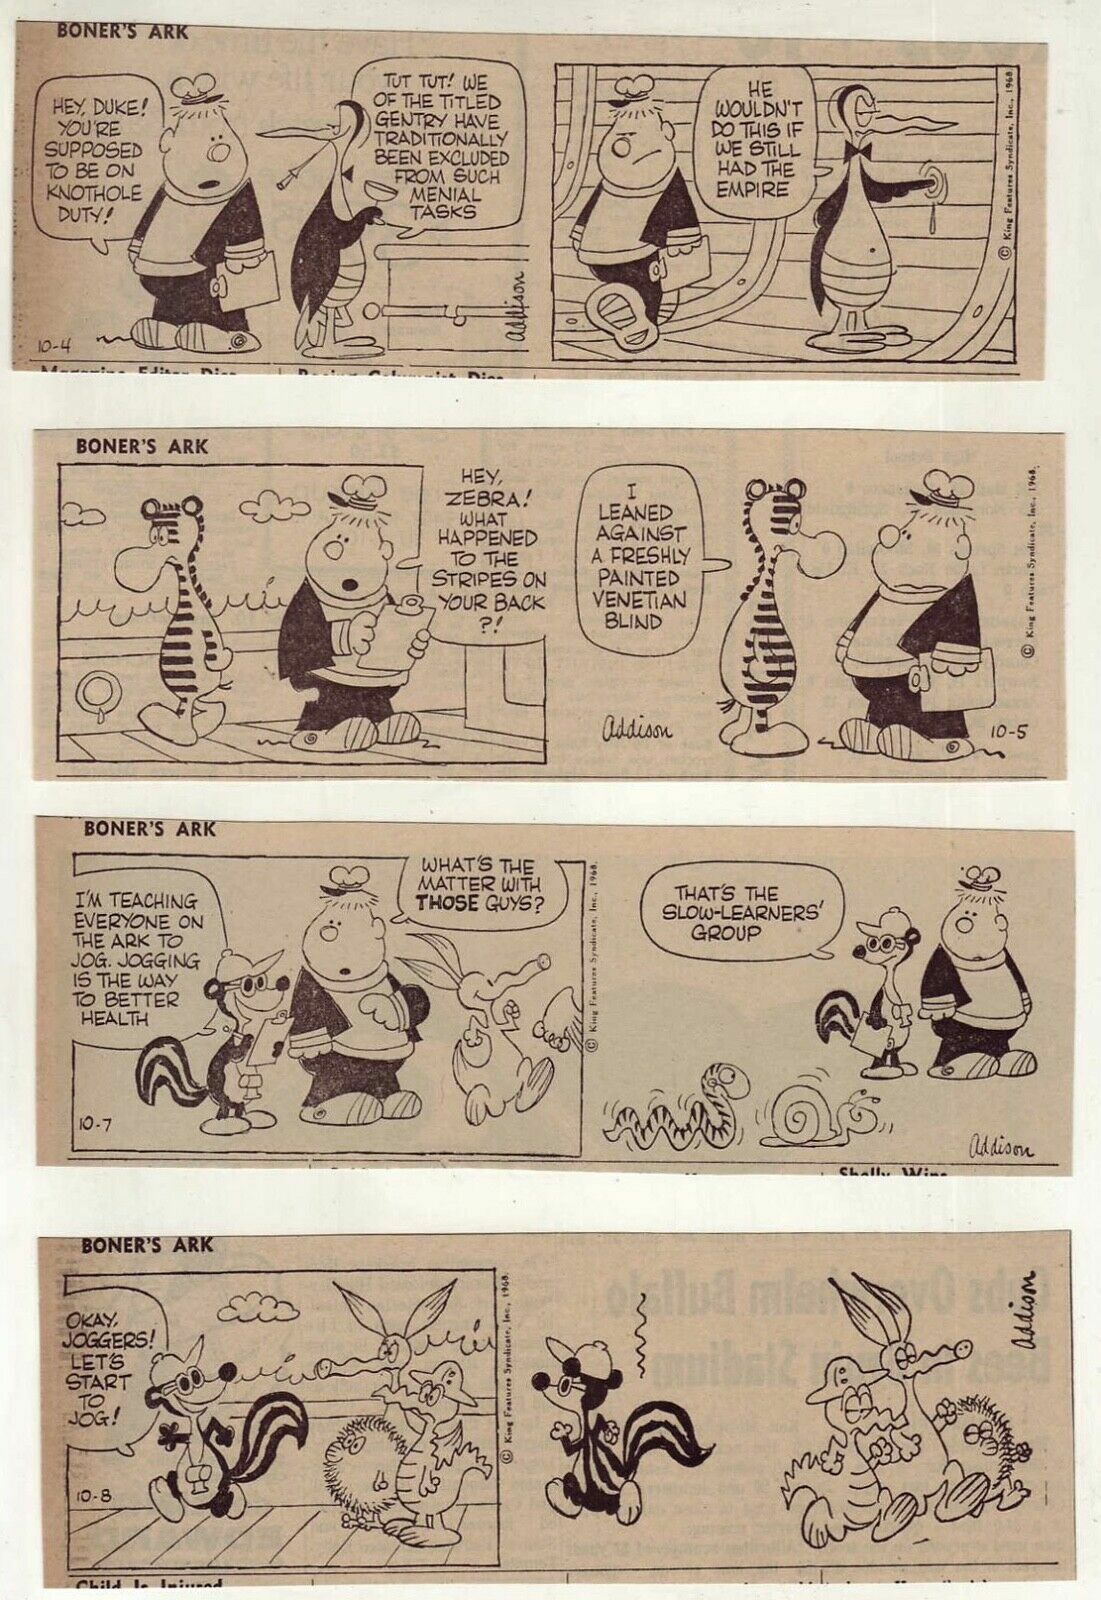 Boner\'s Ark by Mort Walker - 1st year 27 daily comic strips, Complete Oct. 1968